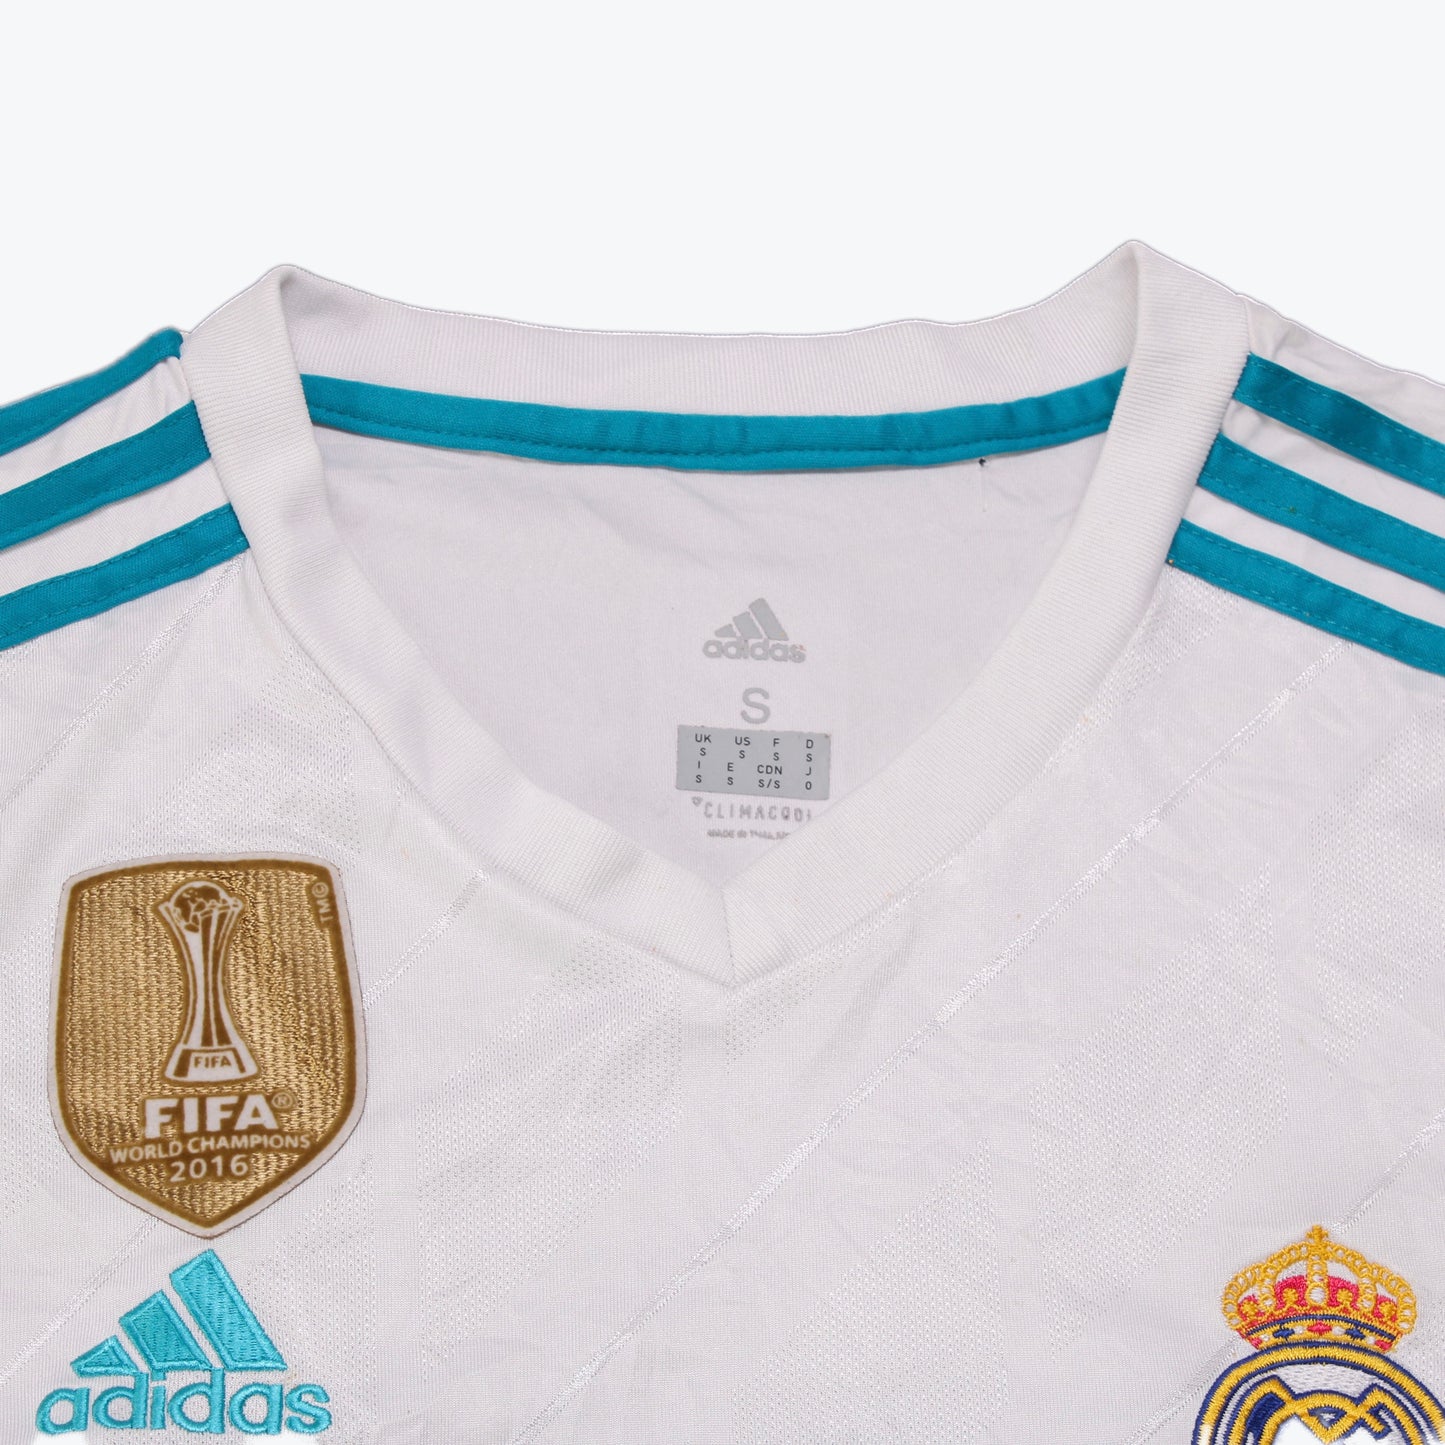 Real Madrid Football Shirt - American Madness